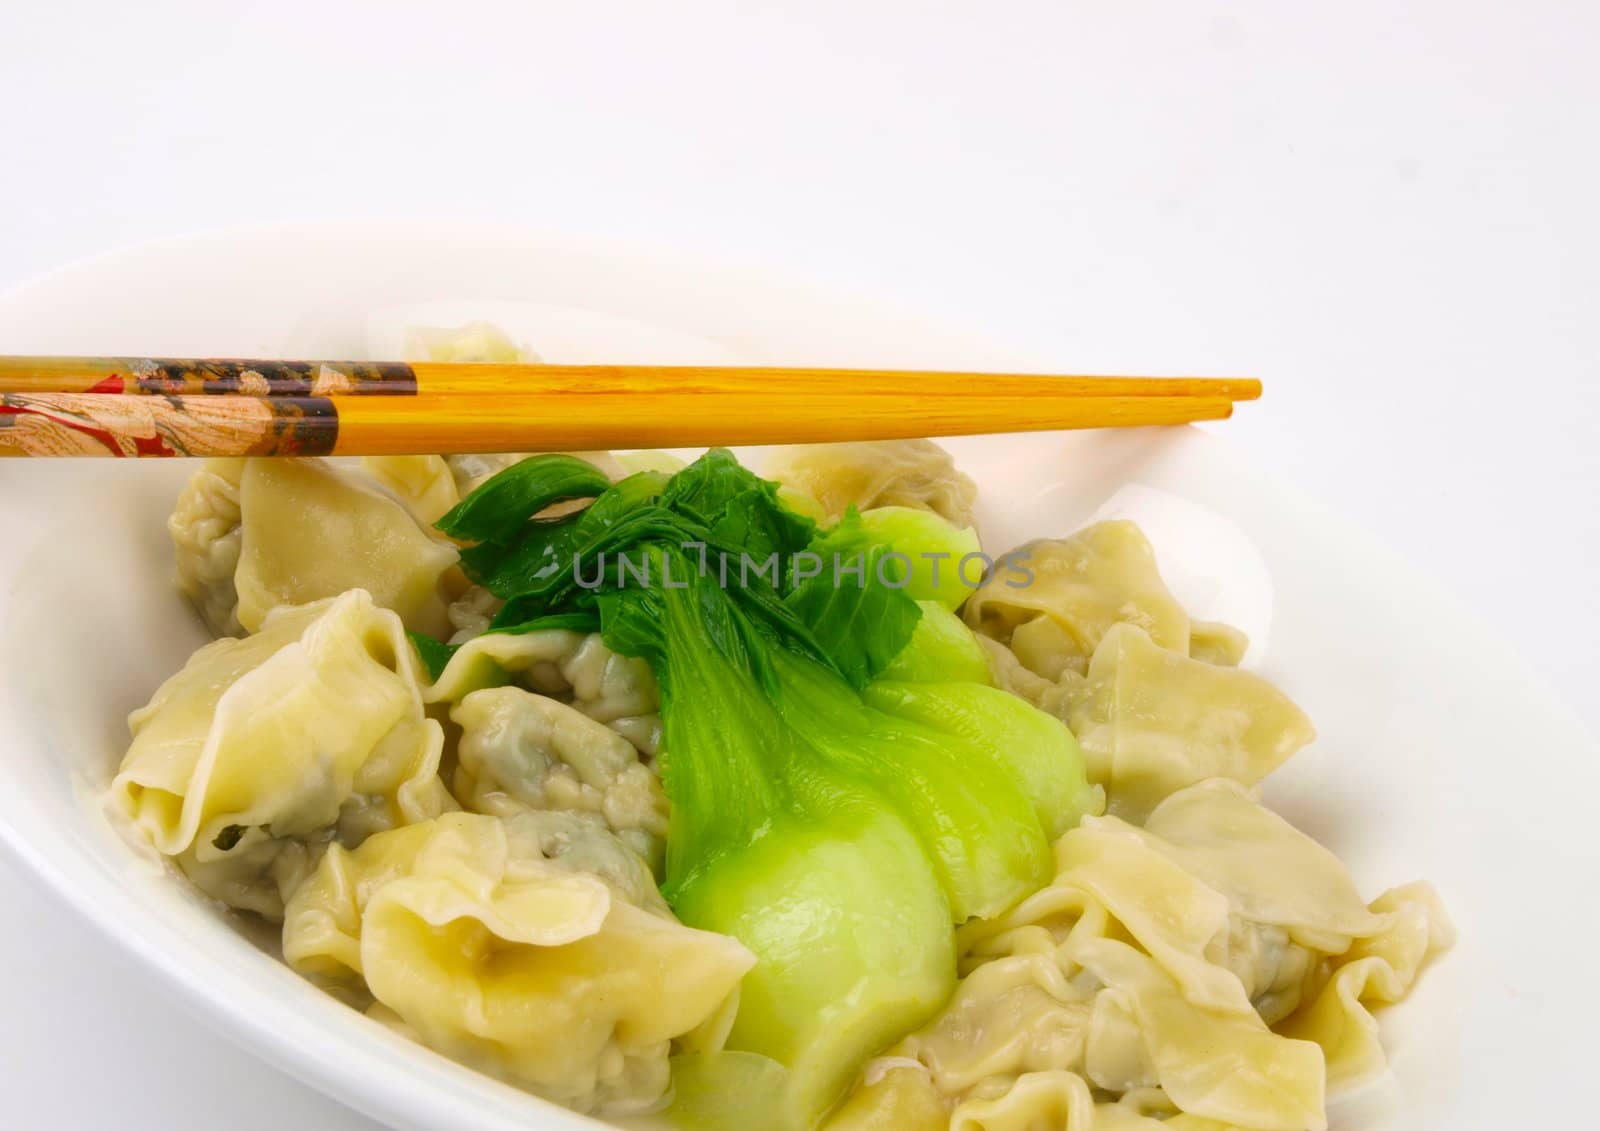 Chinese Dumpling soup by dotweb